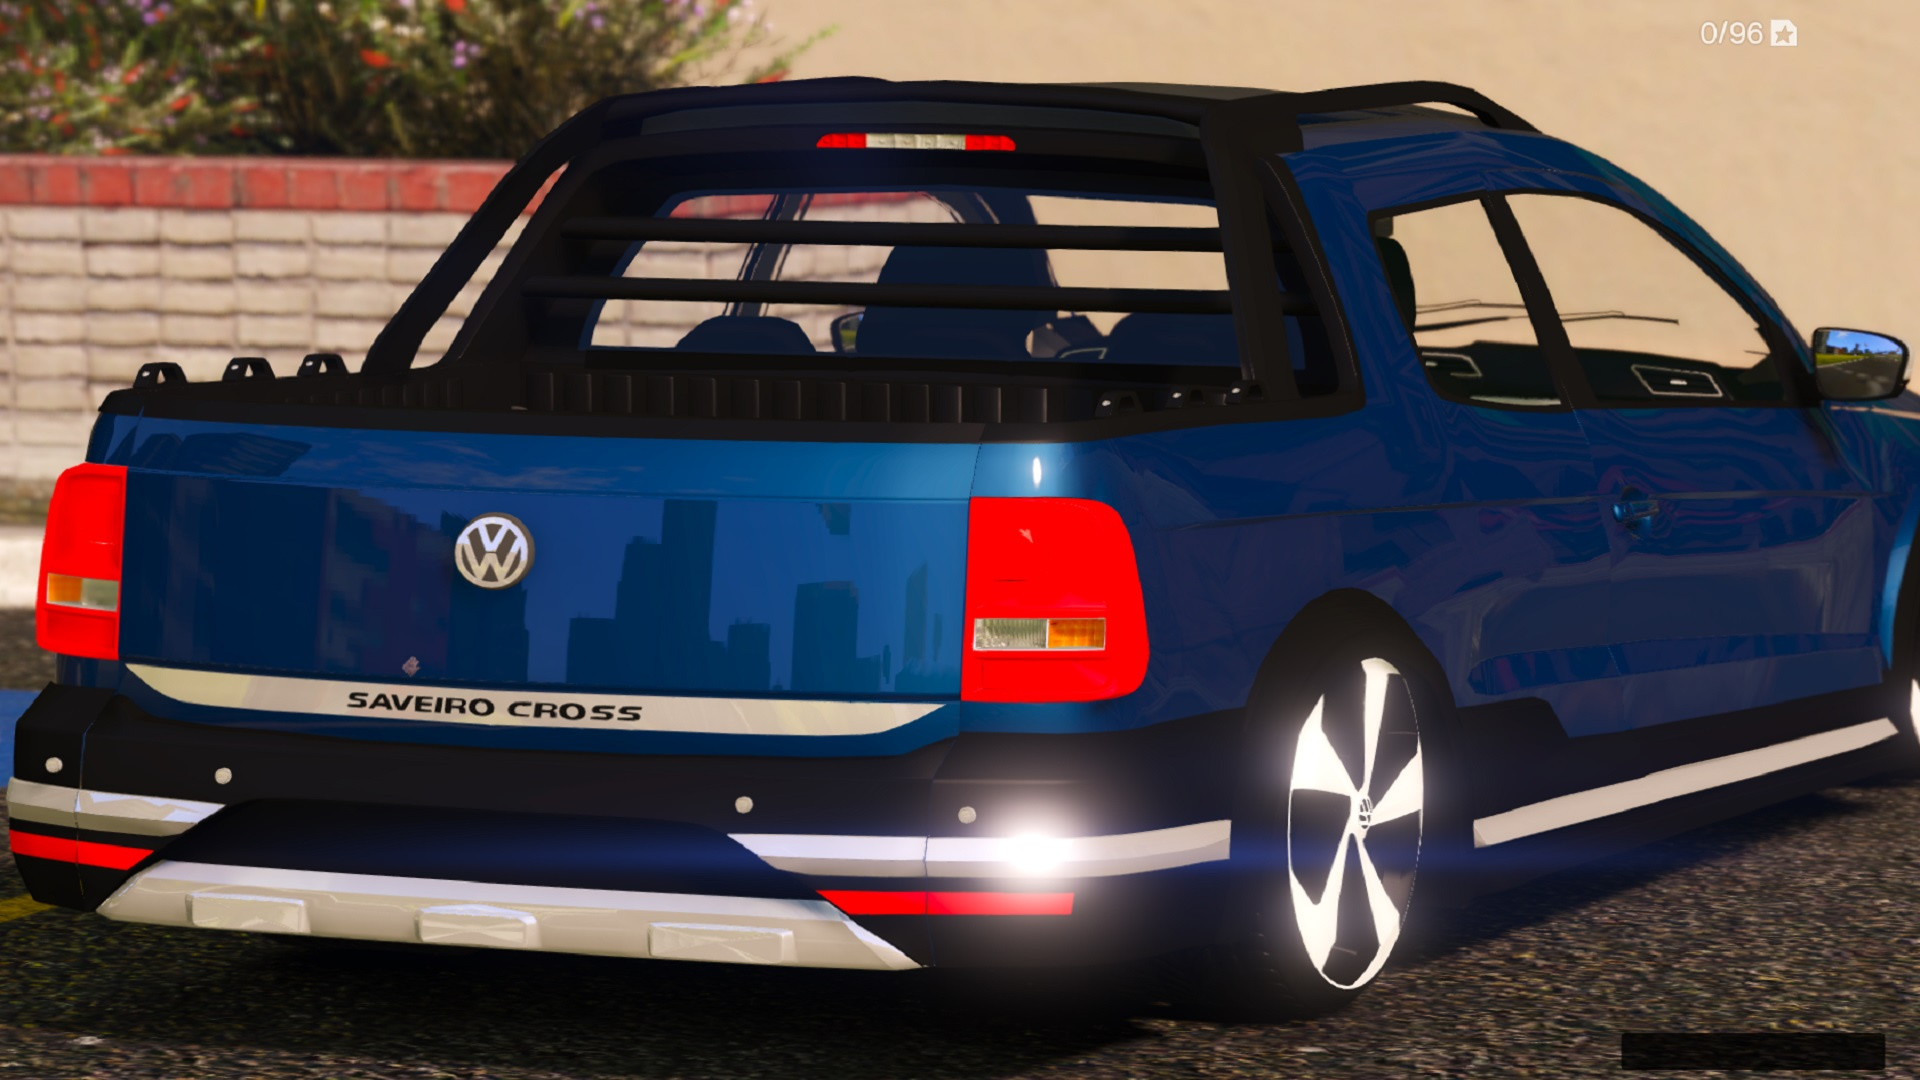 Volkswagen Saveiro G7 Rebaixada com Som - GTA Na Faixa  {